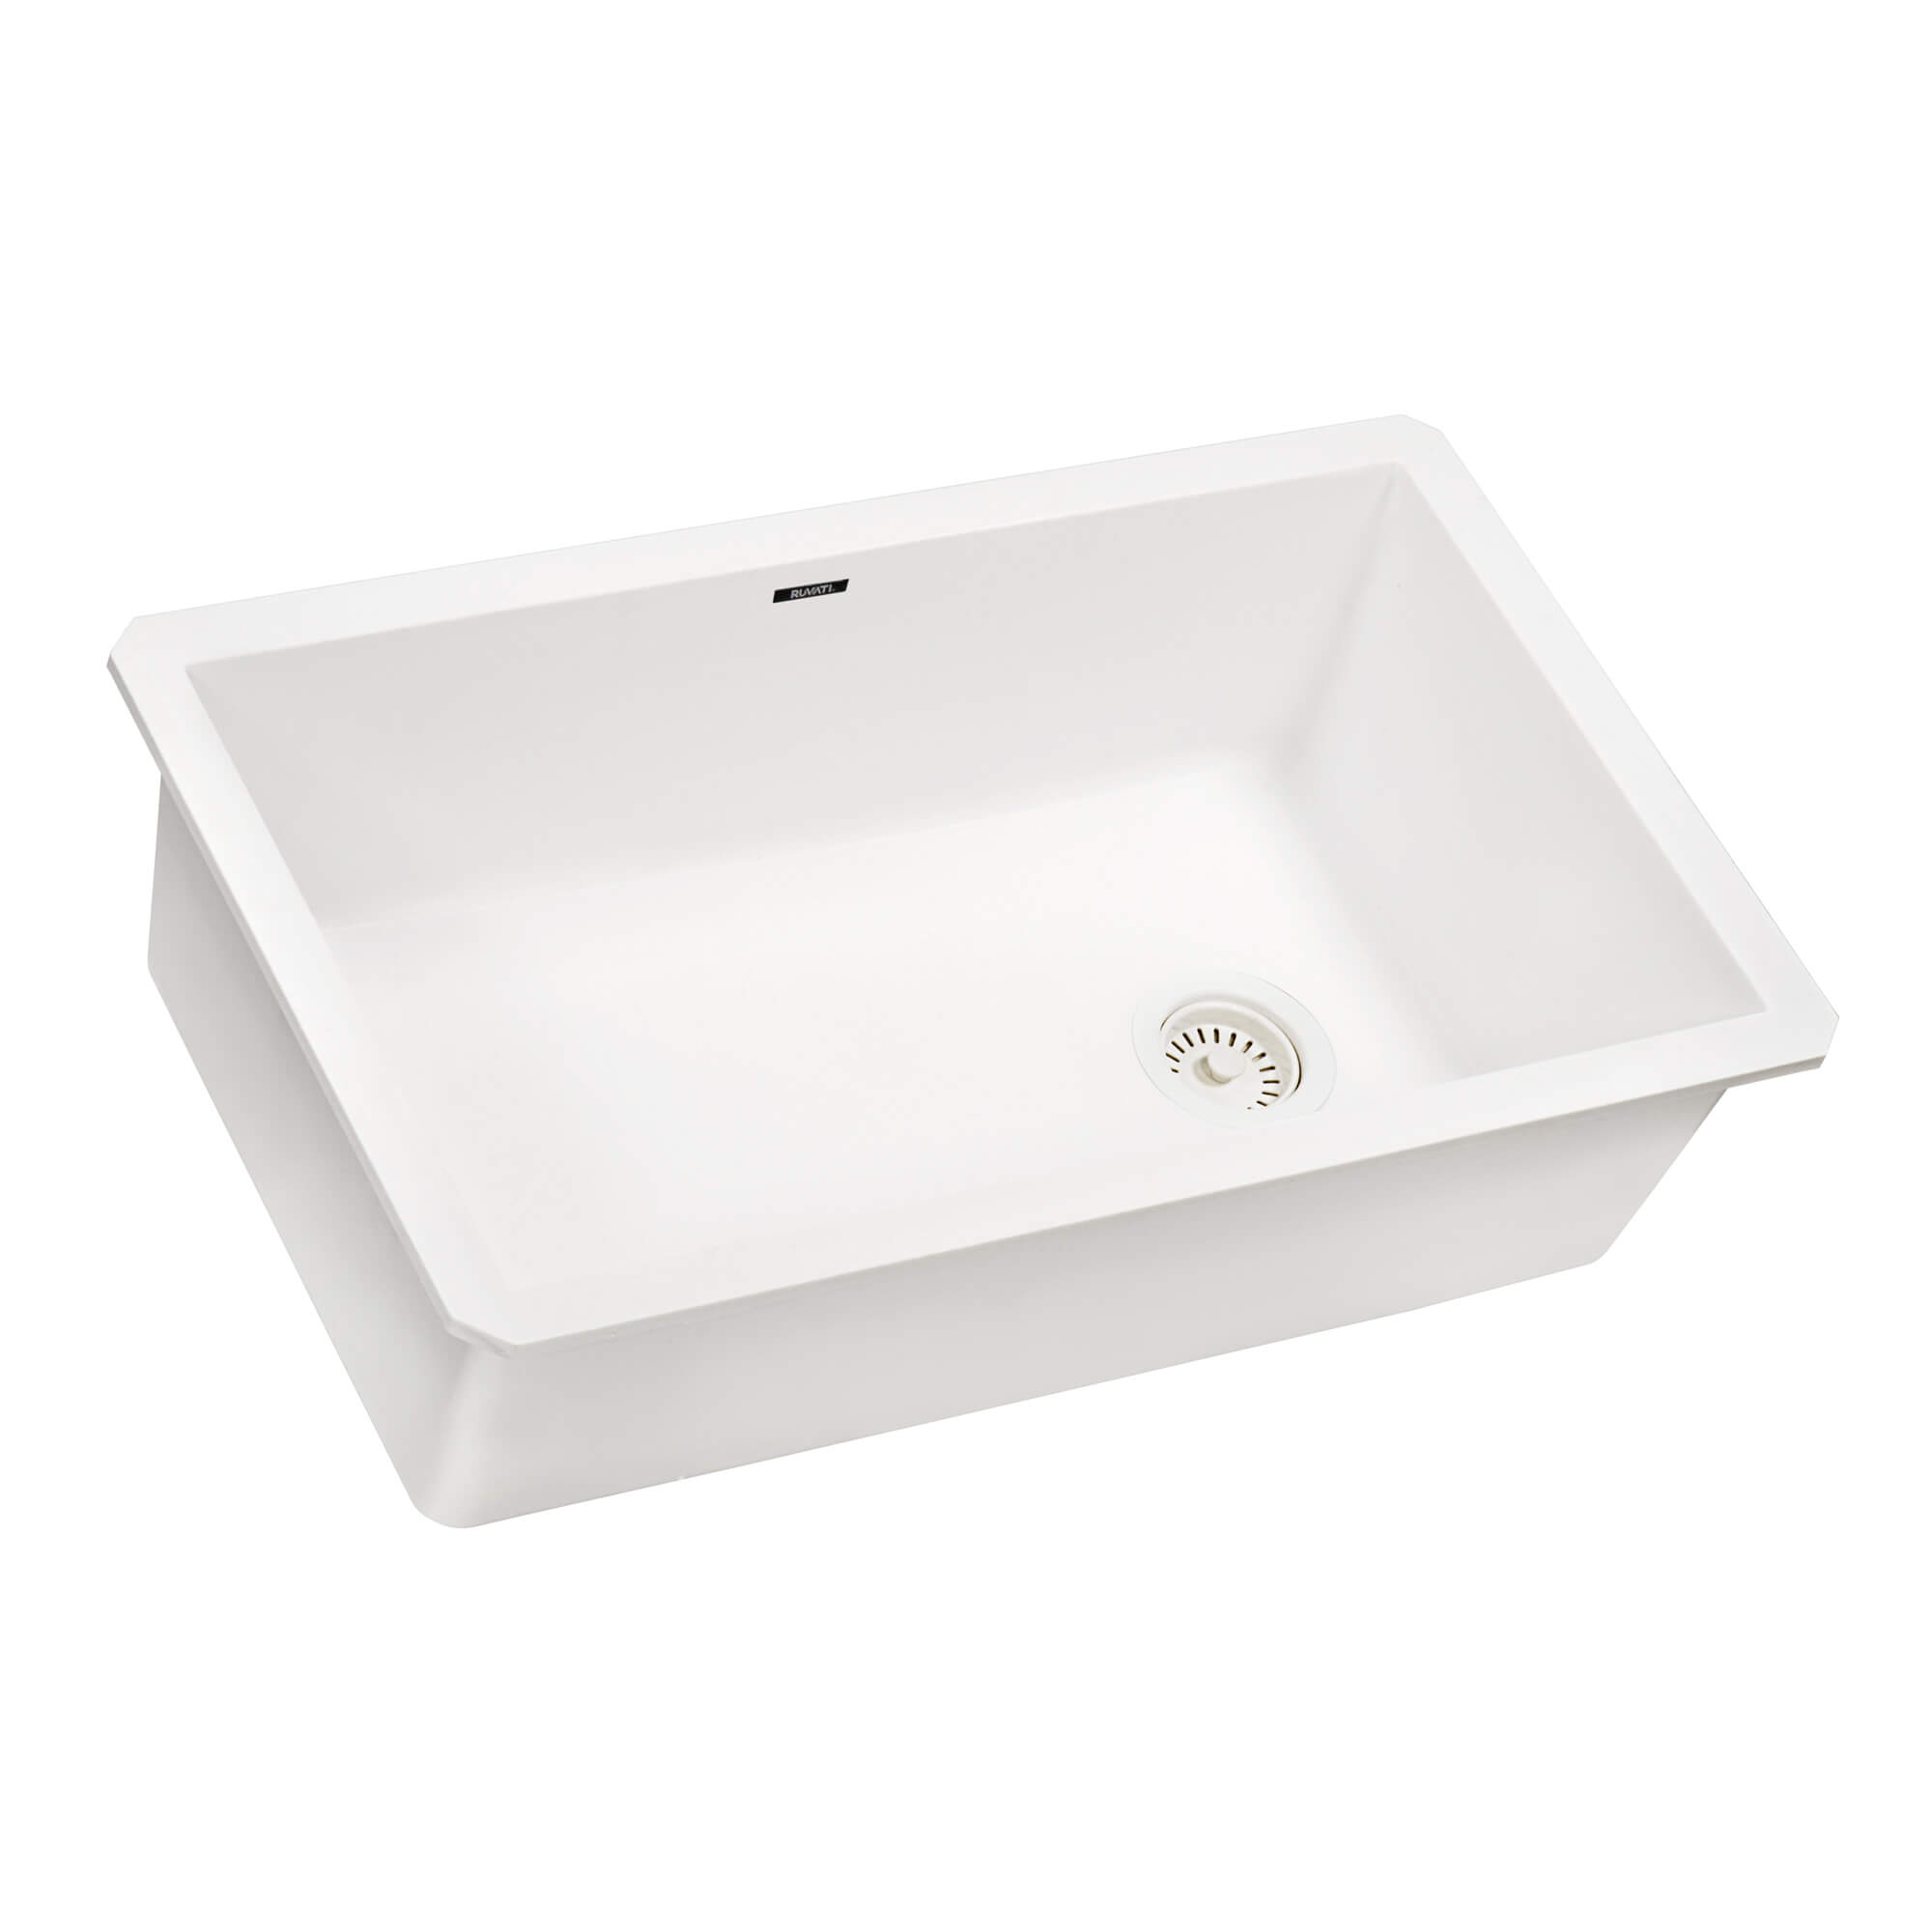 Arctic White RVG2033WH Ruvati 32 x 19 inch Undermount Granite Composite Single Bowl Kitchen Sink